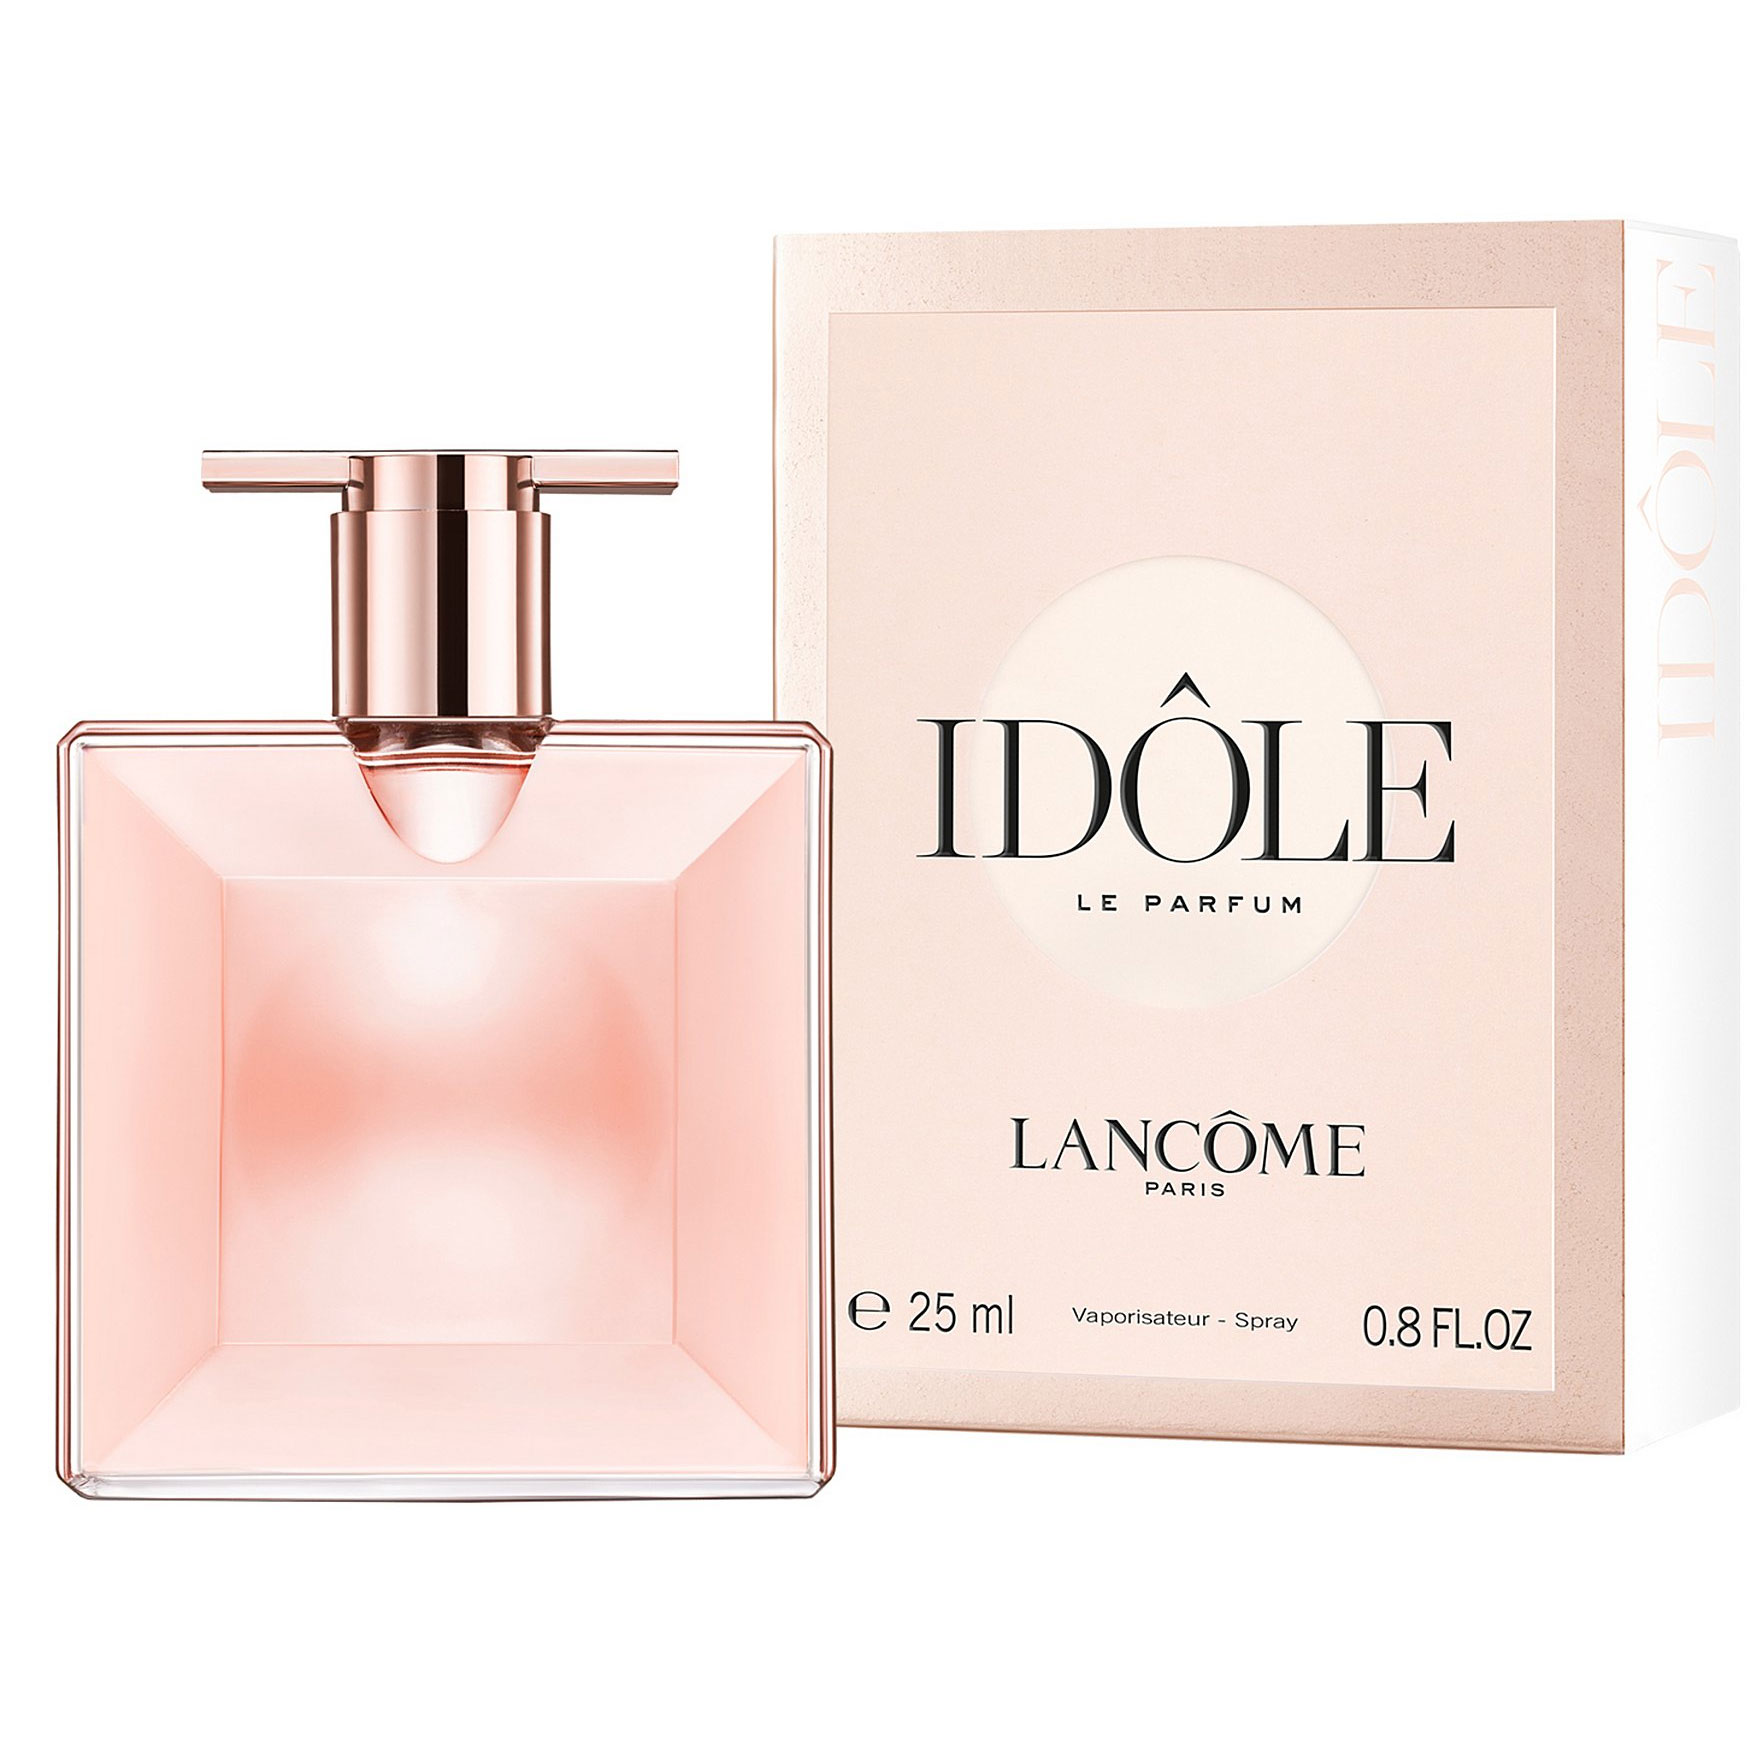 Lancome Idole Lancome Idole new soft floral perfume guides